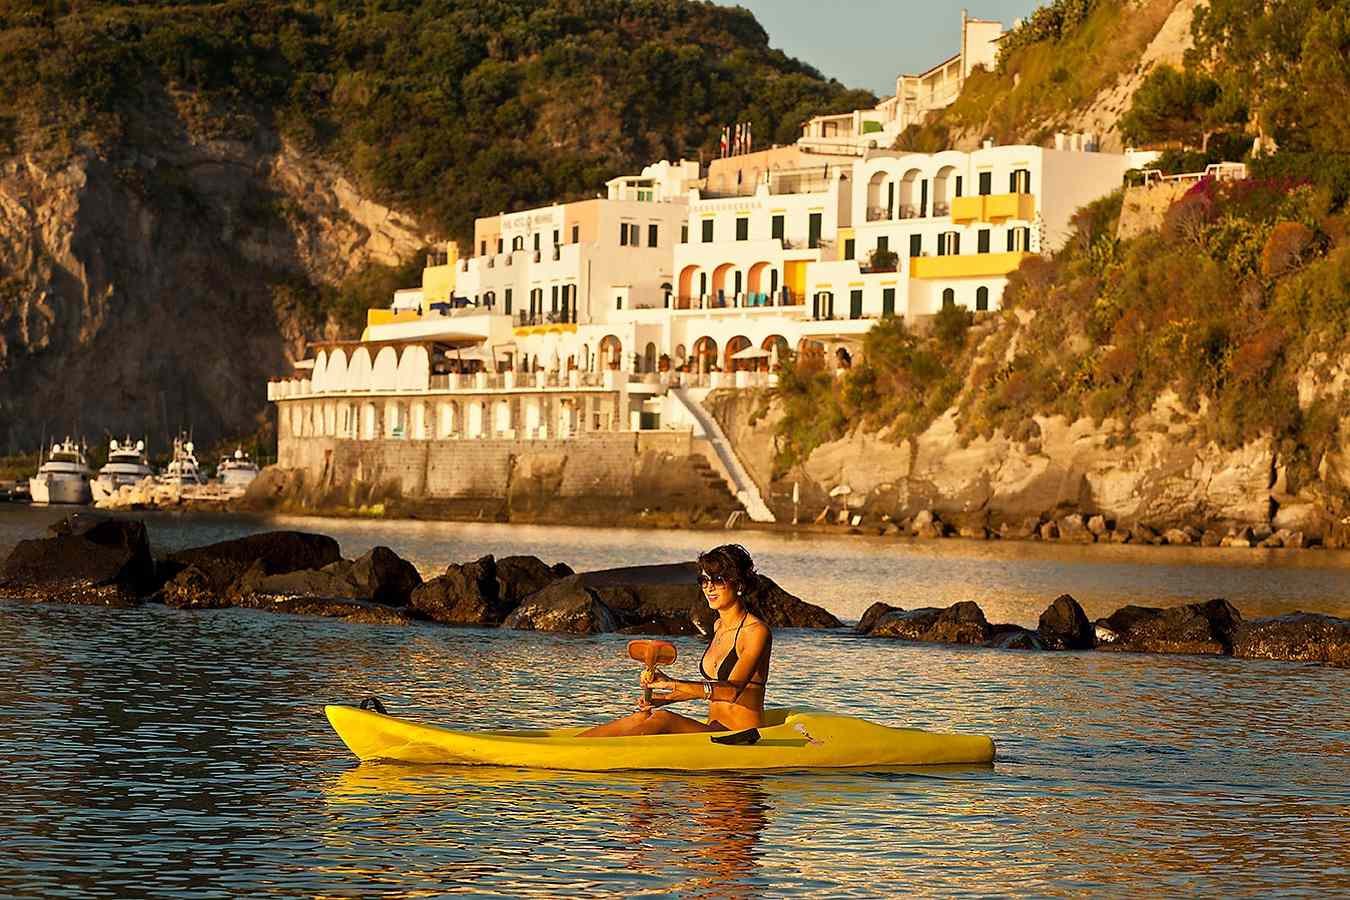 Miramare Sea Resort & Spa Ischia, Campania - Italy